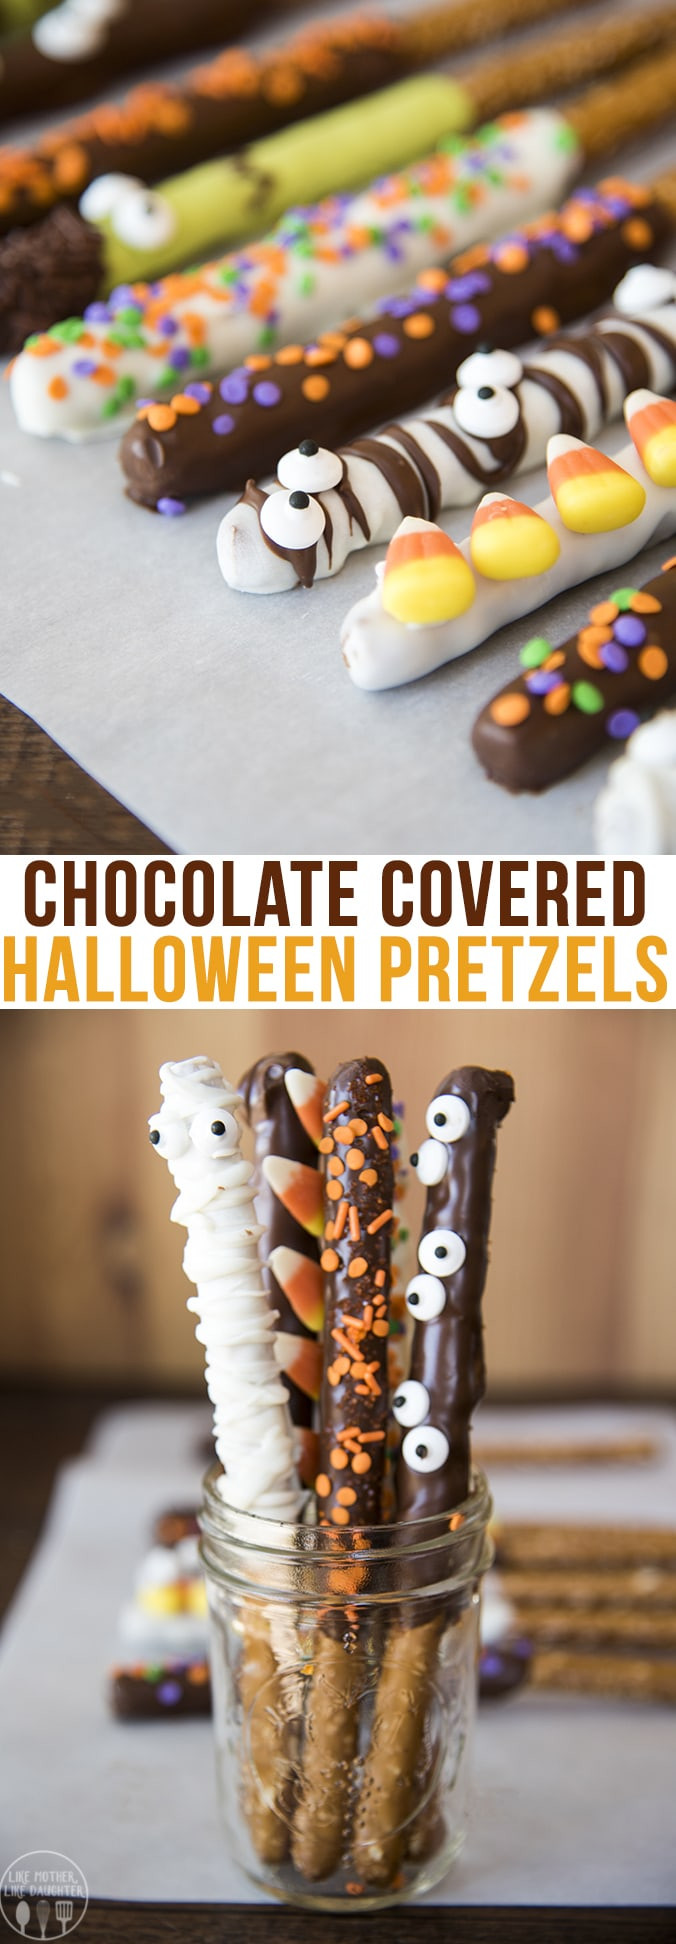 Halloween Chocolate Covered Pretzels
 Chocolate Covered Halloween Pretzels – Like Mother Like